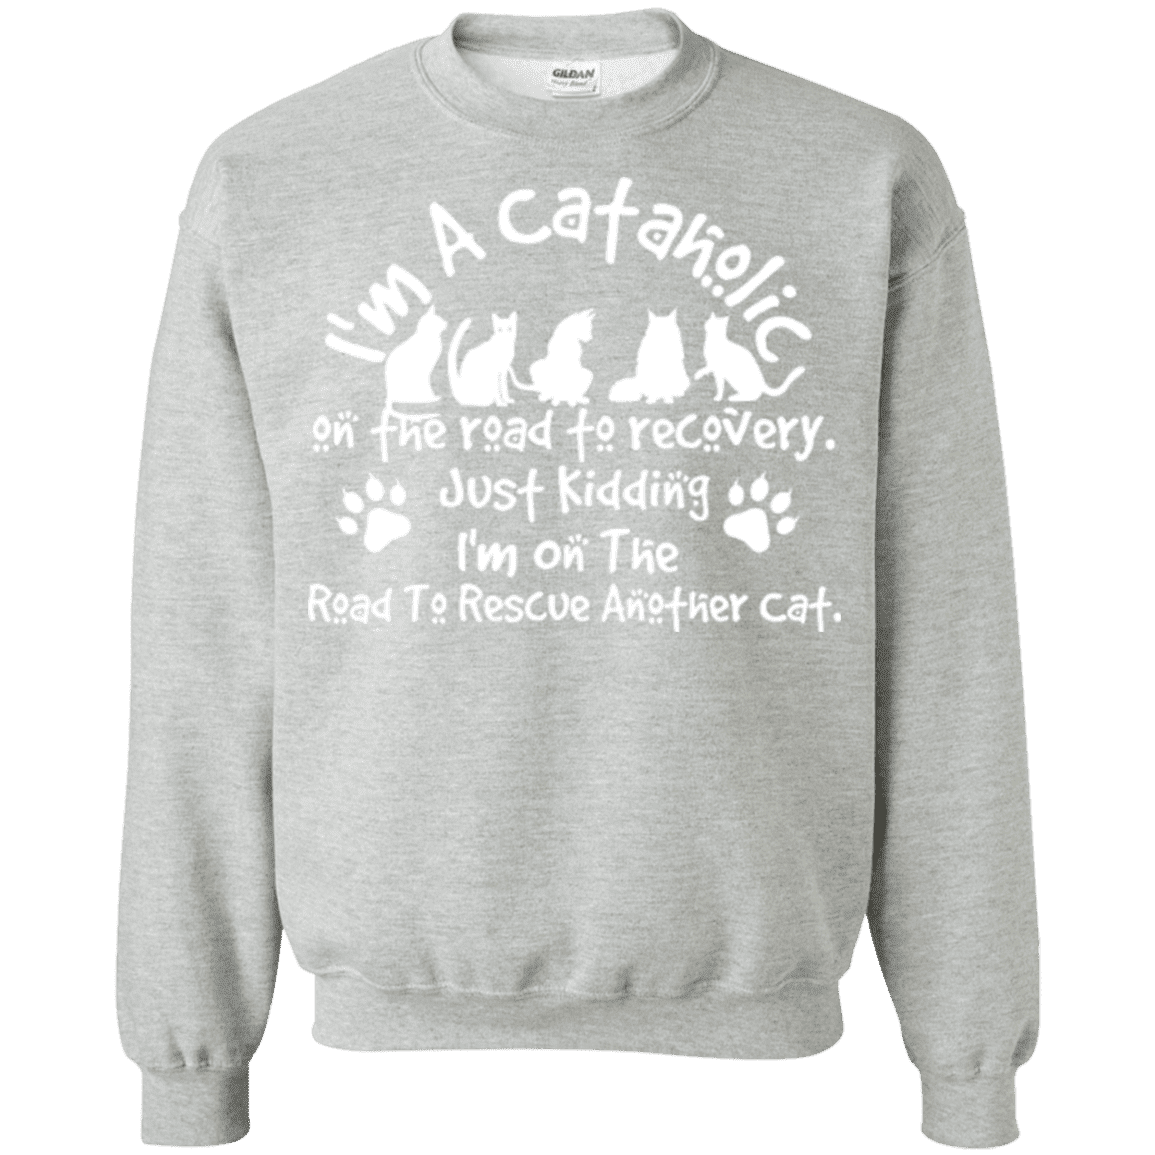 I'm a Cataholic - Sweatshirt.